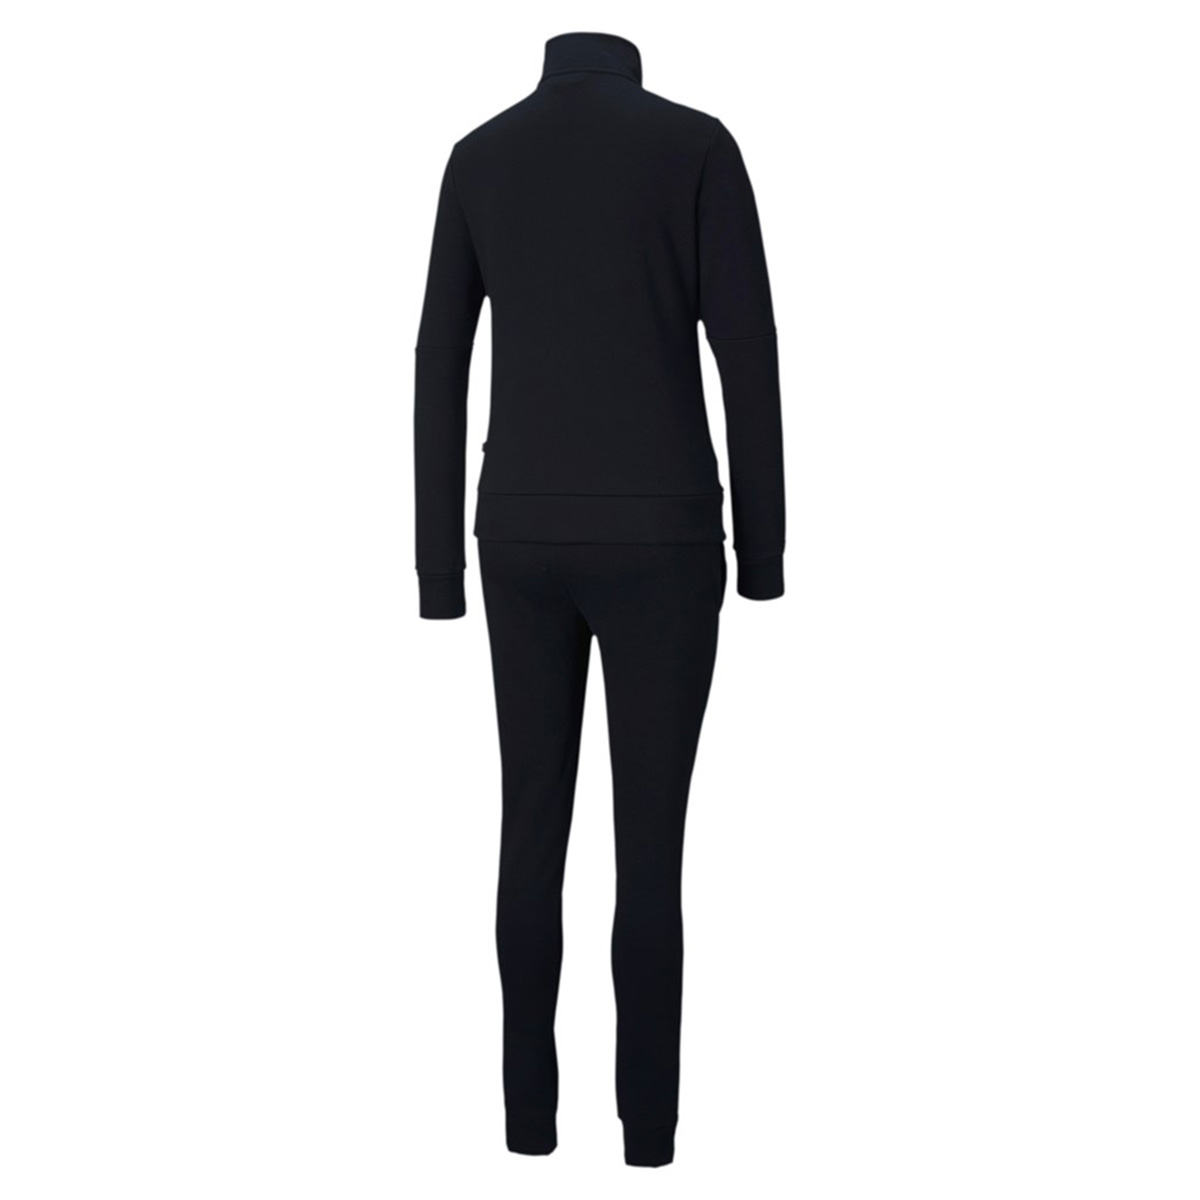 PUMA Damen Amplified Sweat Suit CL Trainingsanzug Jogginganzug 583658 schwarz